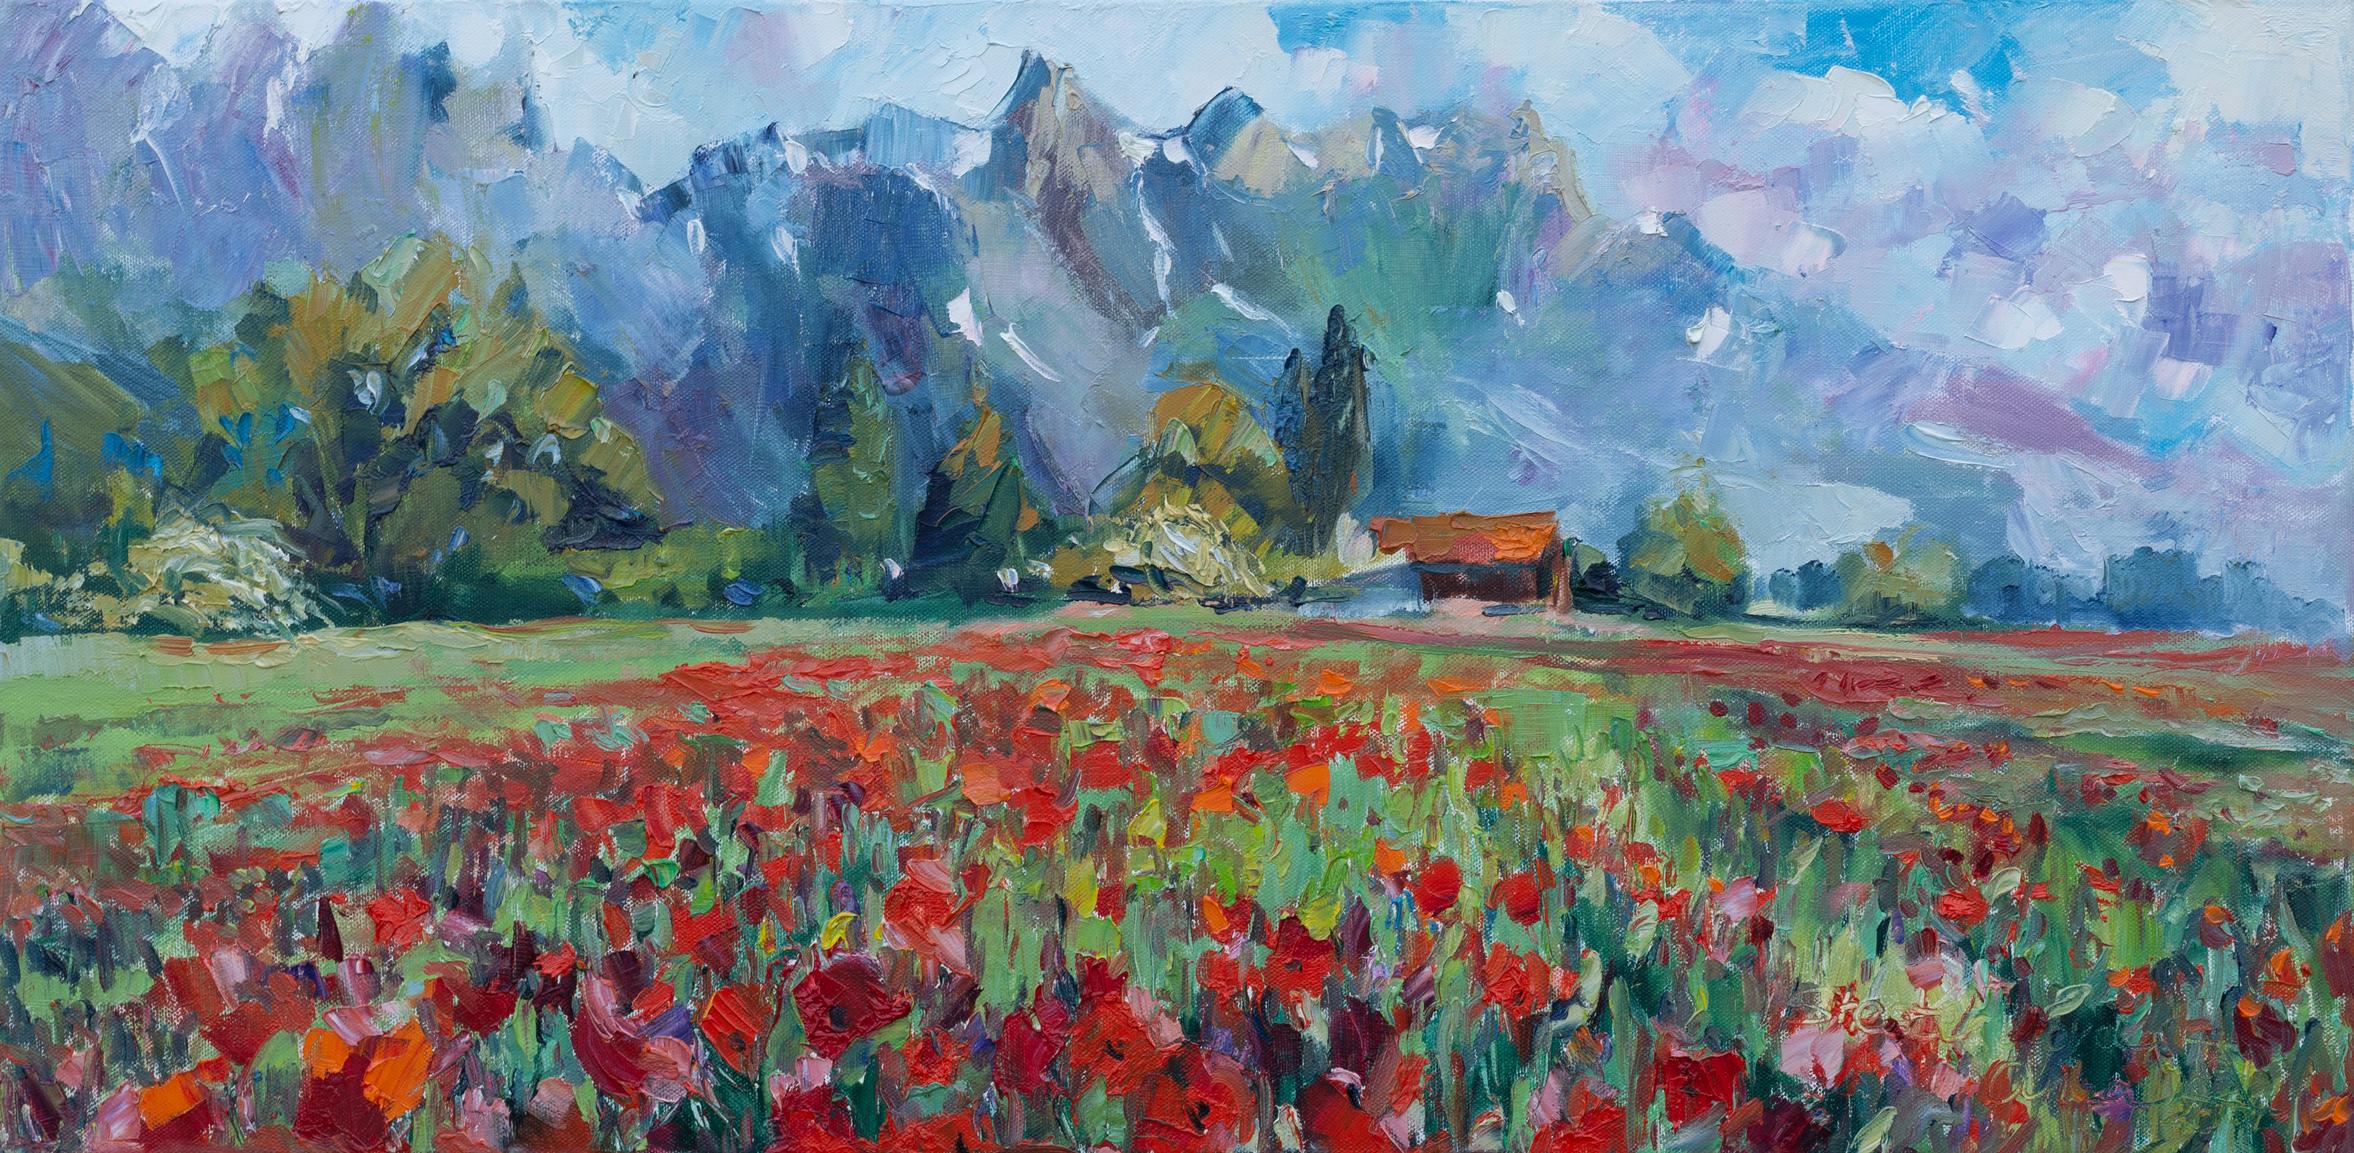 Anna Shesterikova Landscape Painting - Poppy Field in Grabs